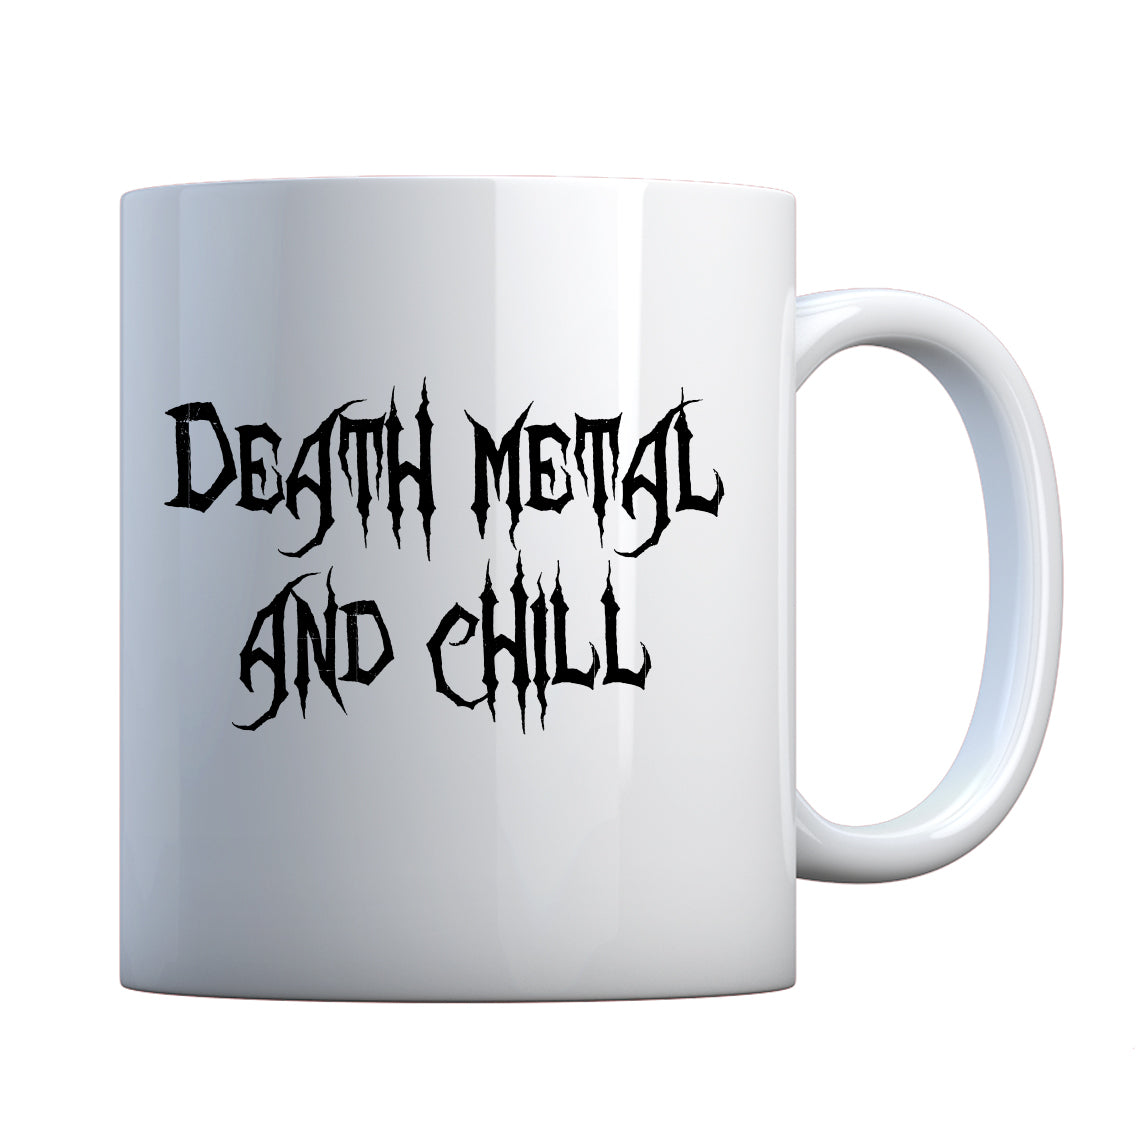 Mug Death Metal and Chill Ceramic Gift Mug